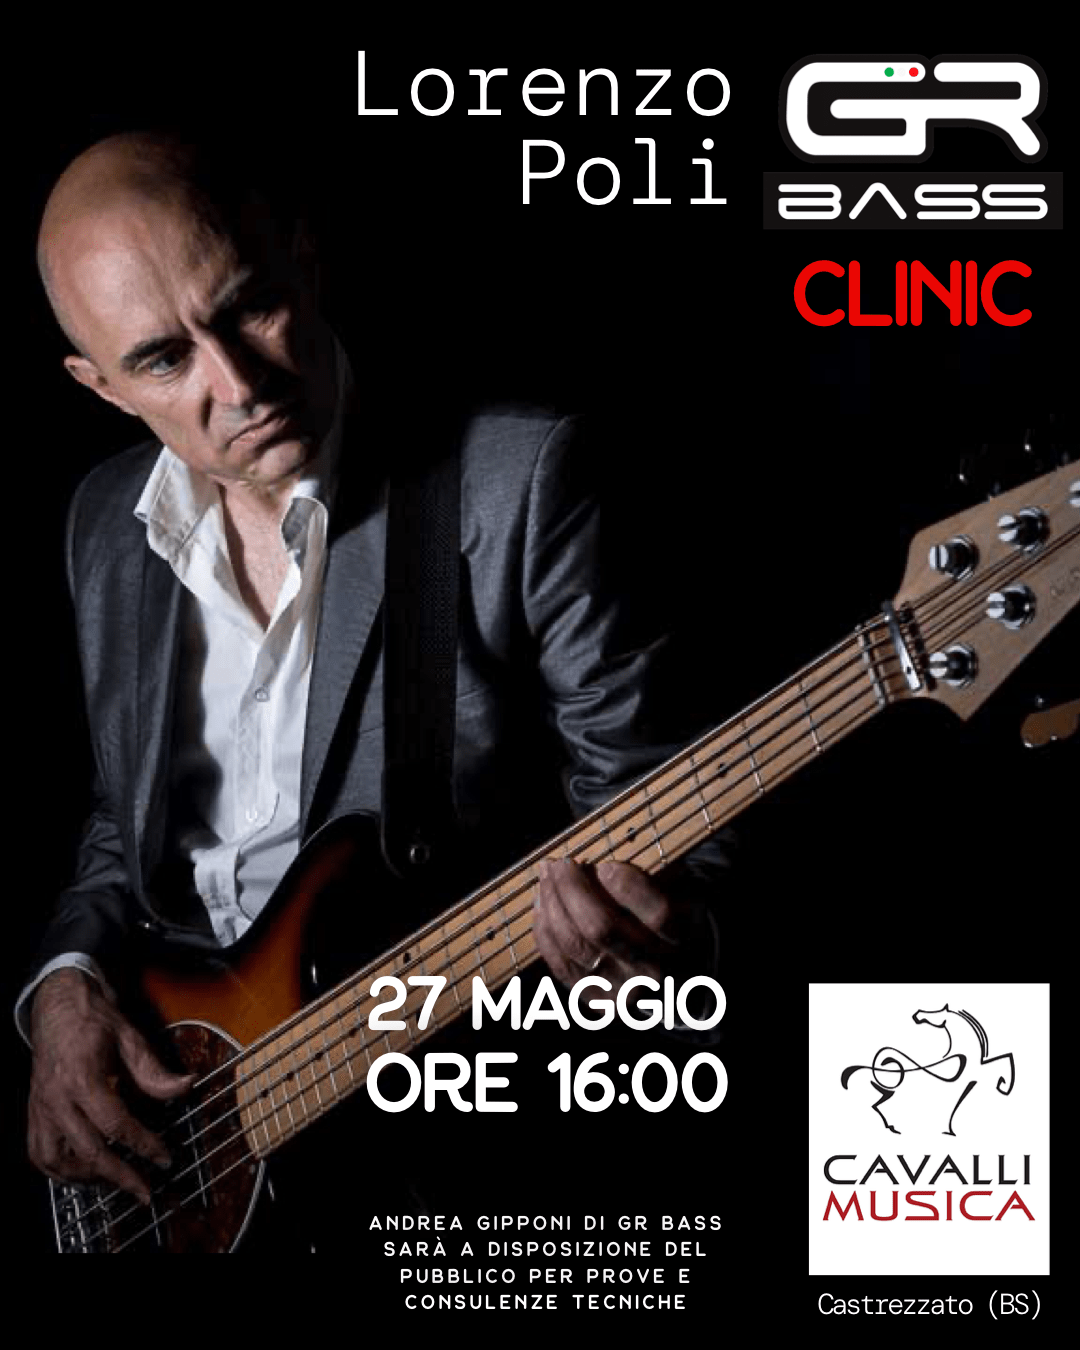 GrBass Clinic, Lorenzo Poli